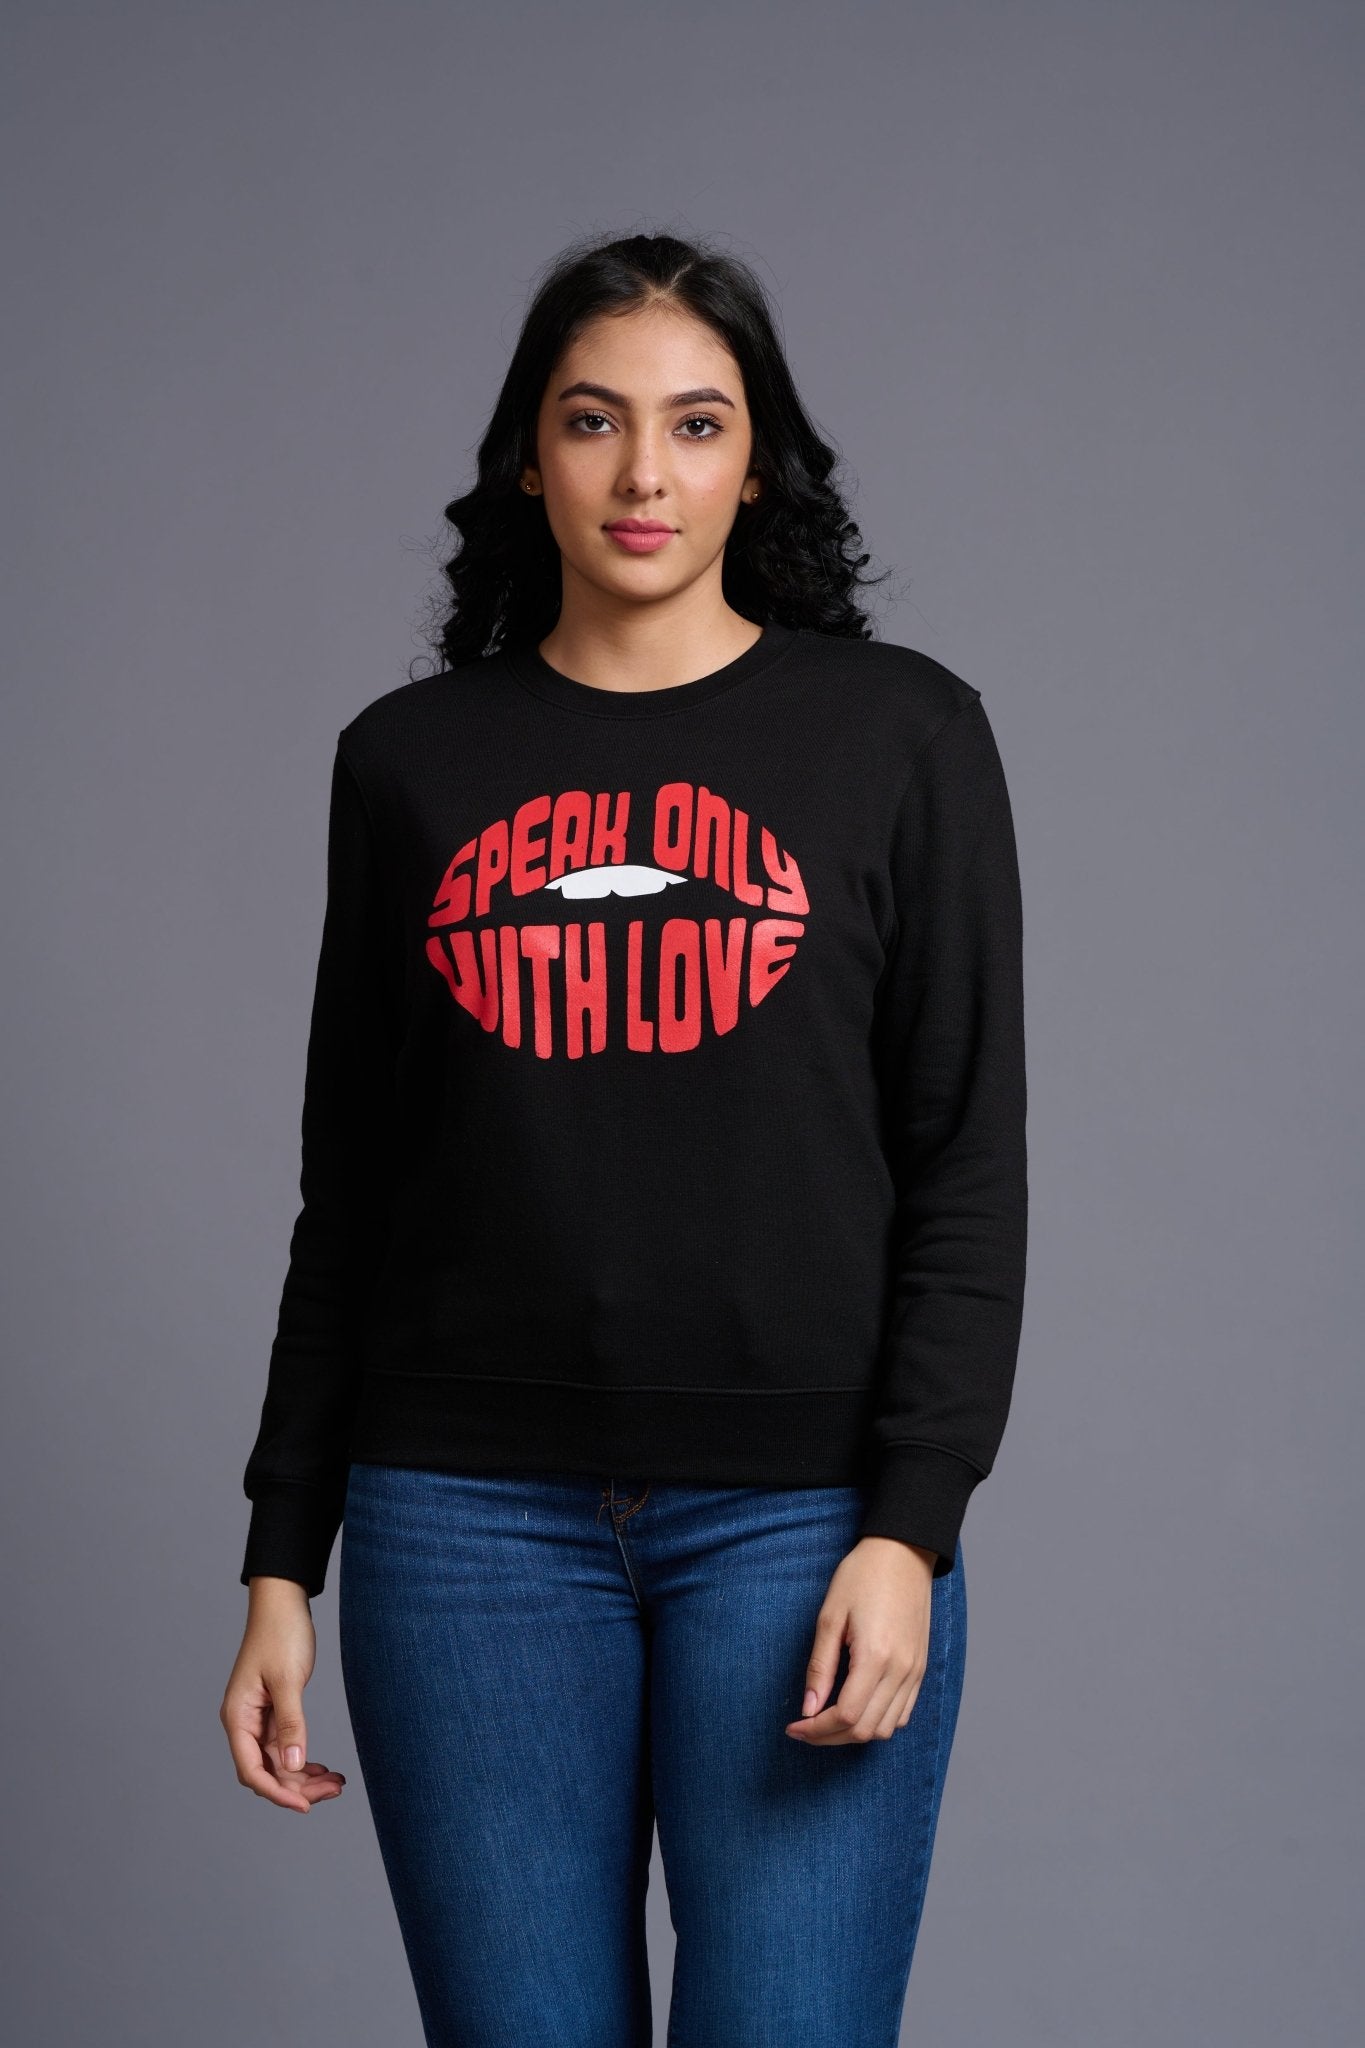 Speak Only With Love Printed Black Sweatshirt for Women - Go Devil